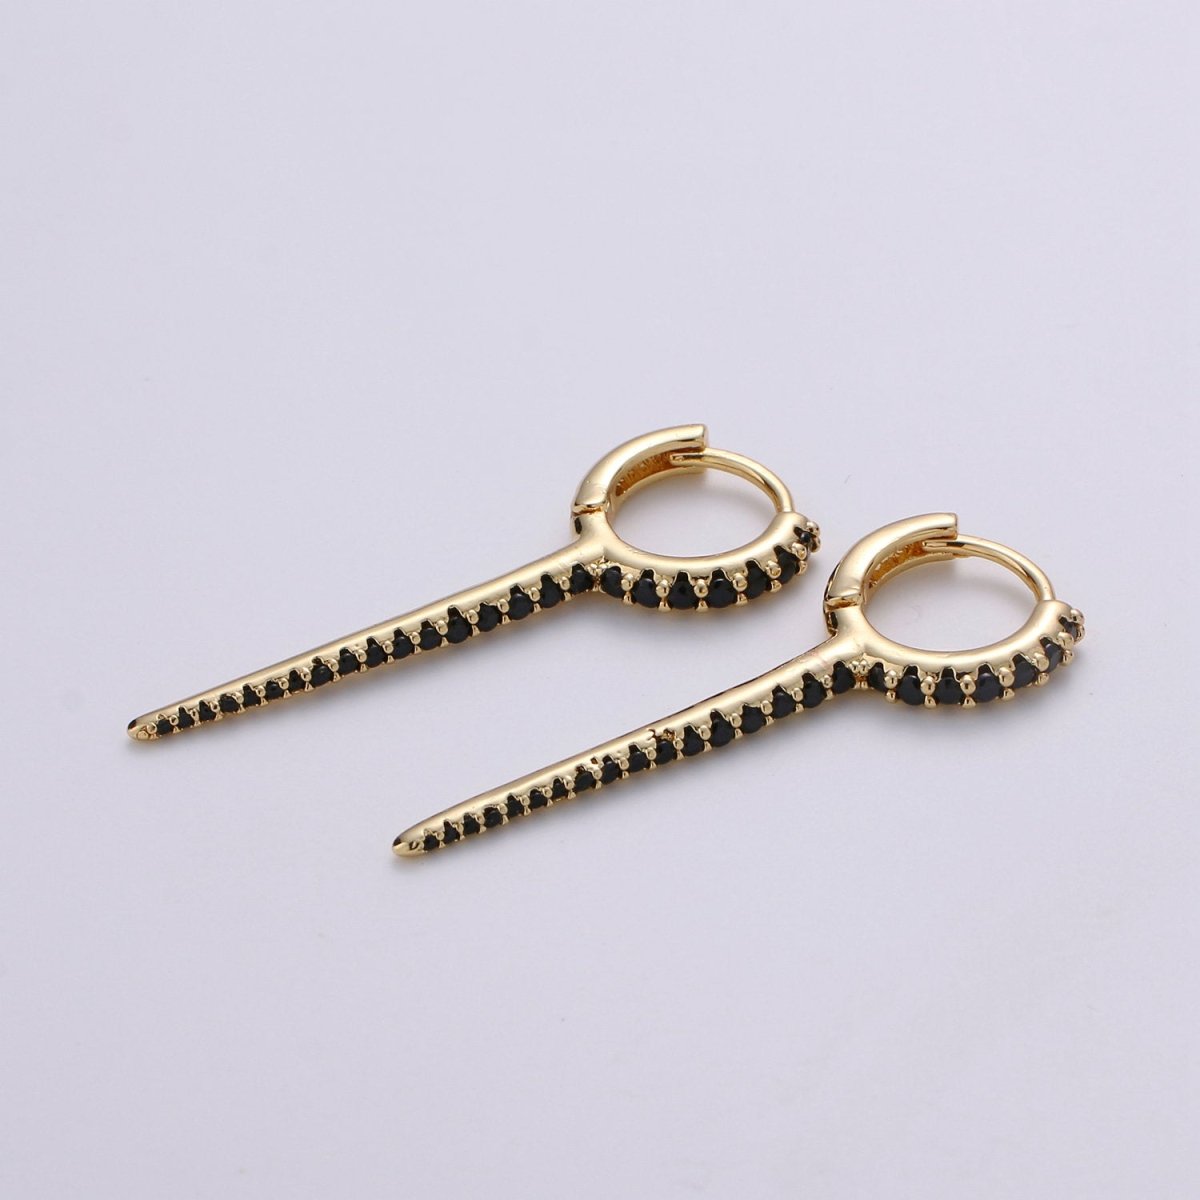 Dainty Huggie earrings, spike earrings, Multi Color hoop earrings, Long Gold Micro Pave Spike Earring Minimal Jewelry Q-165 - Q-171 - DLUXCA